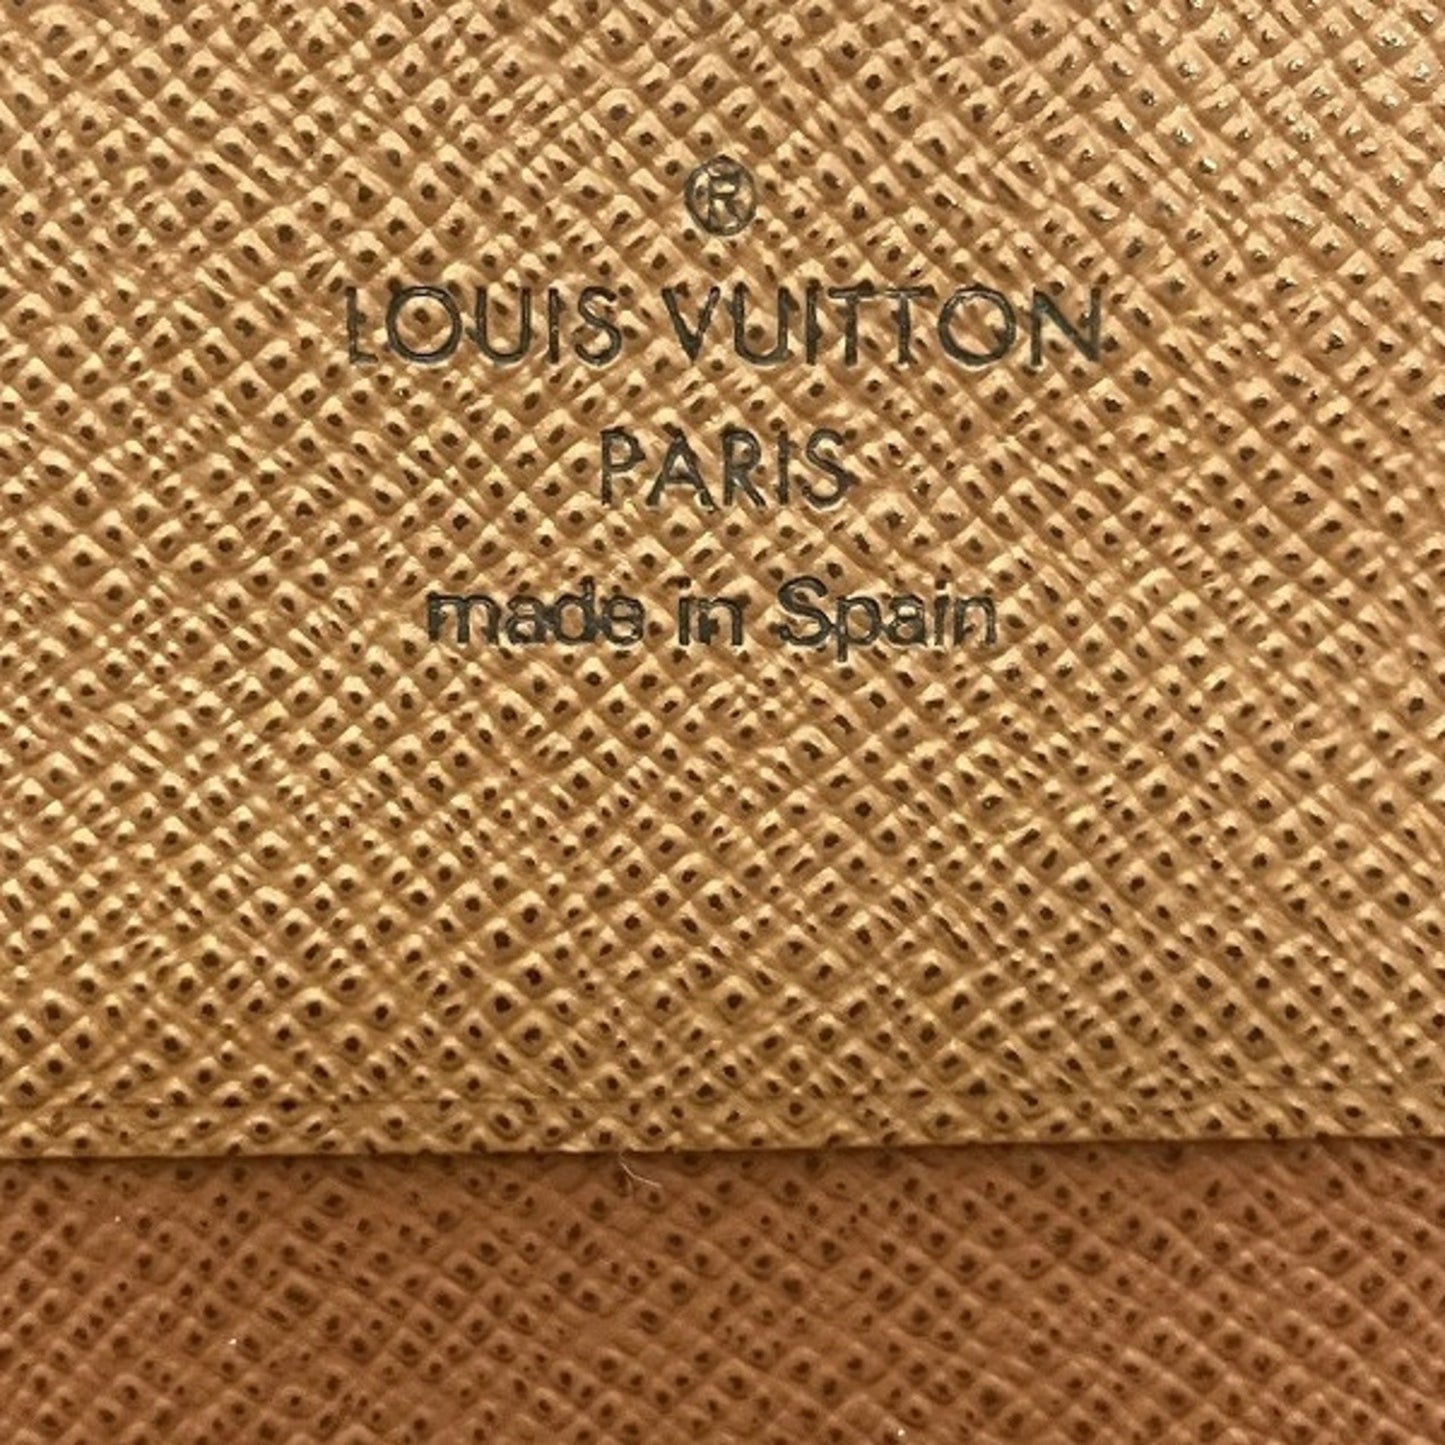 Louis Vuitton Porte carte credit bifold